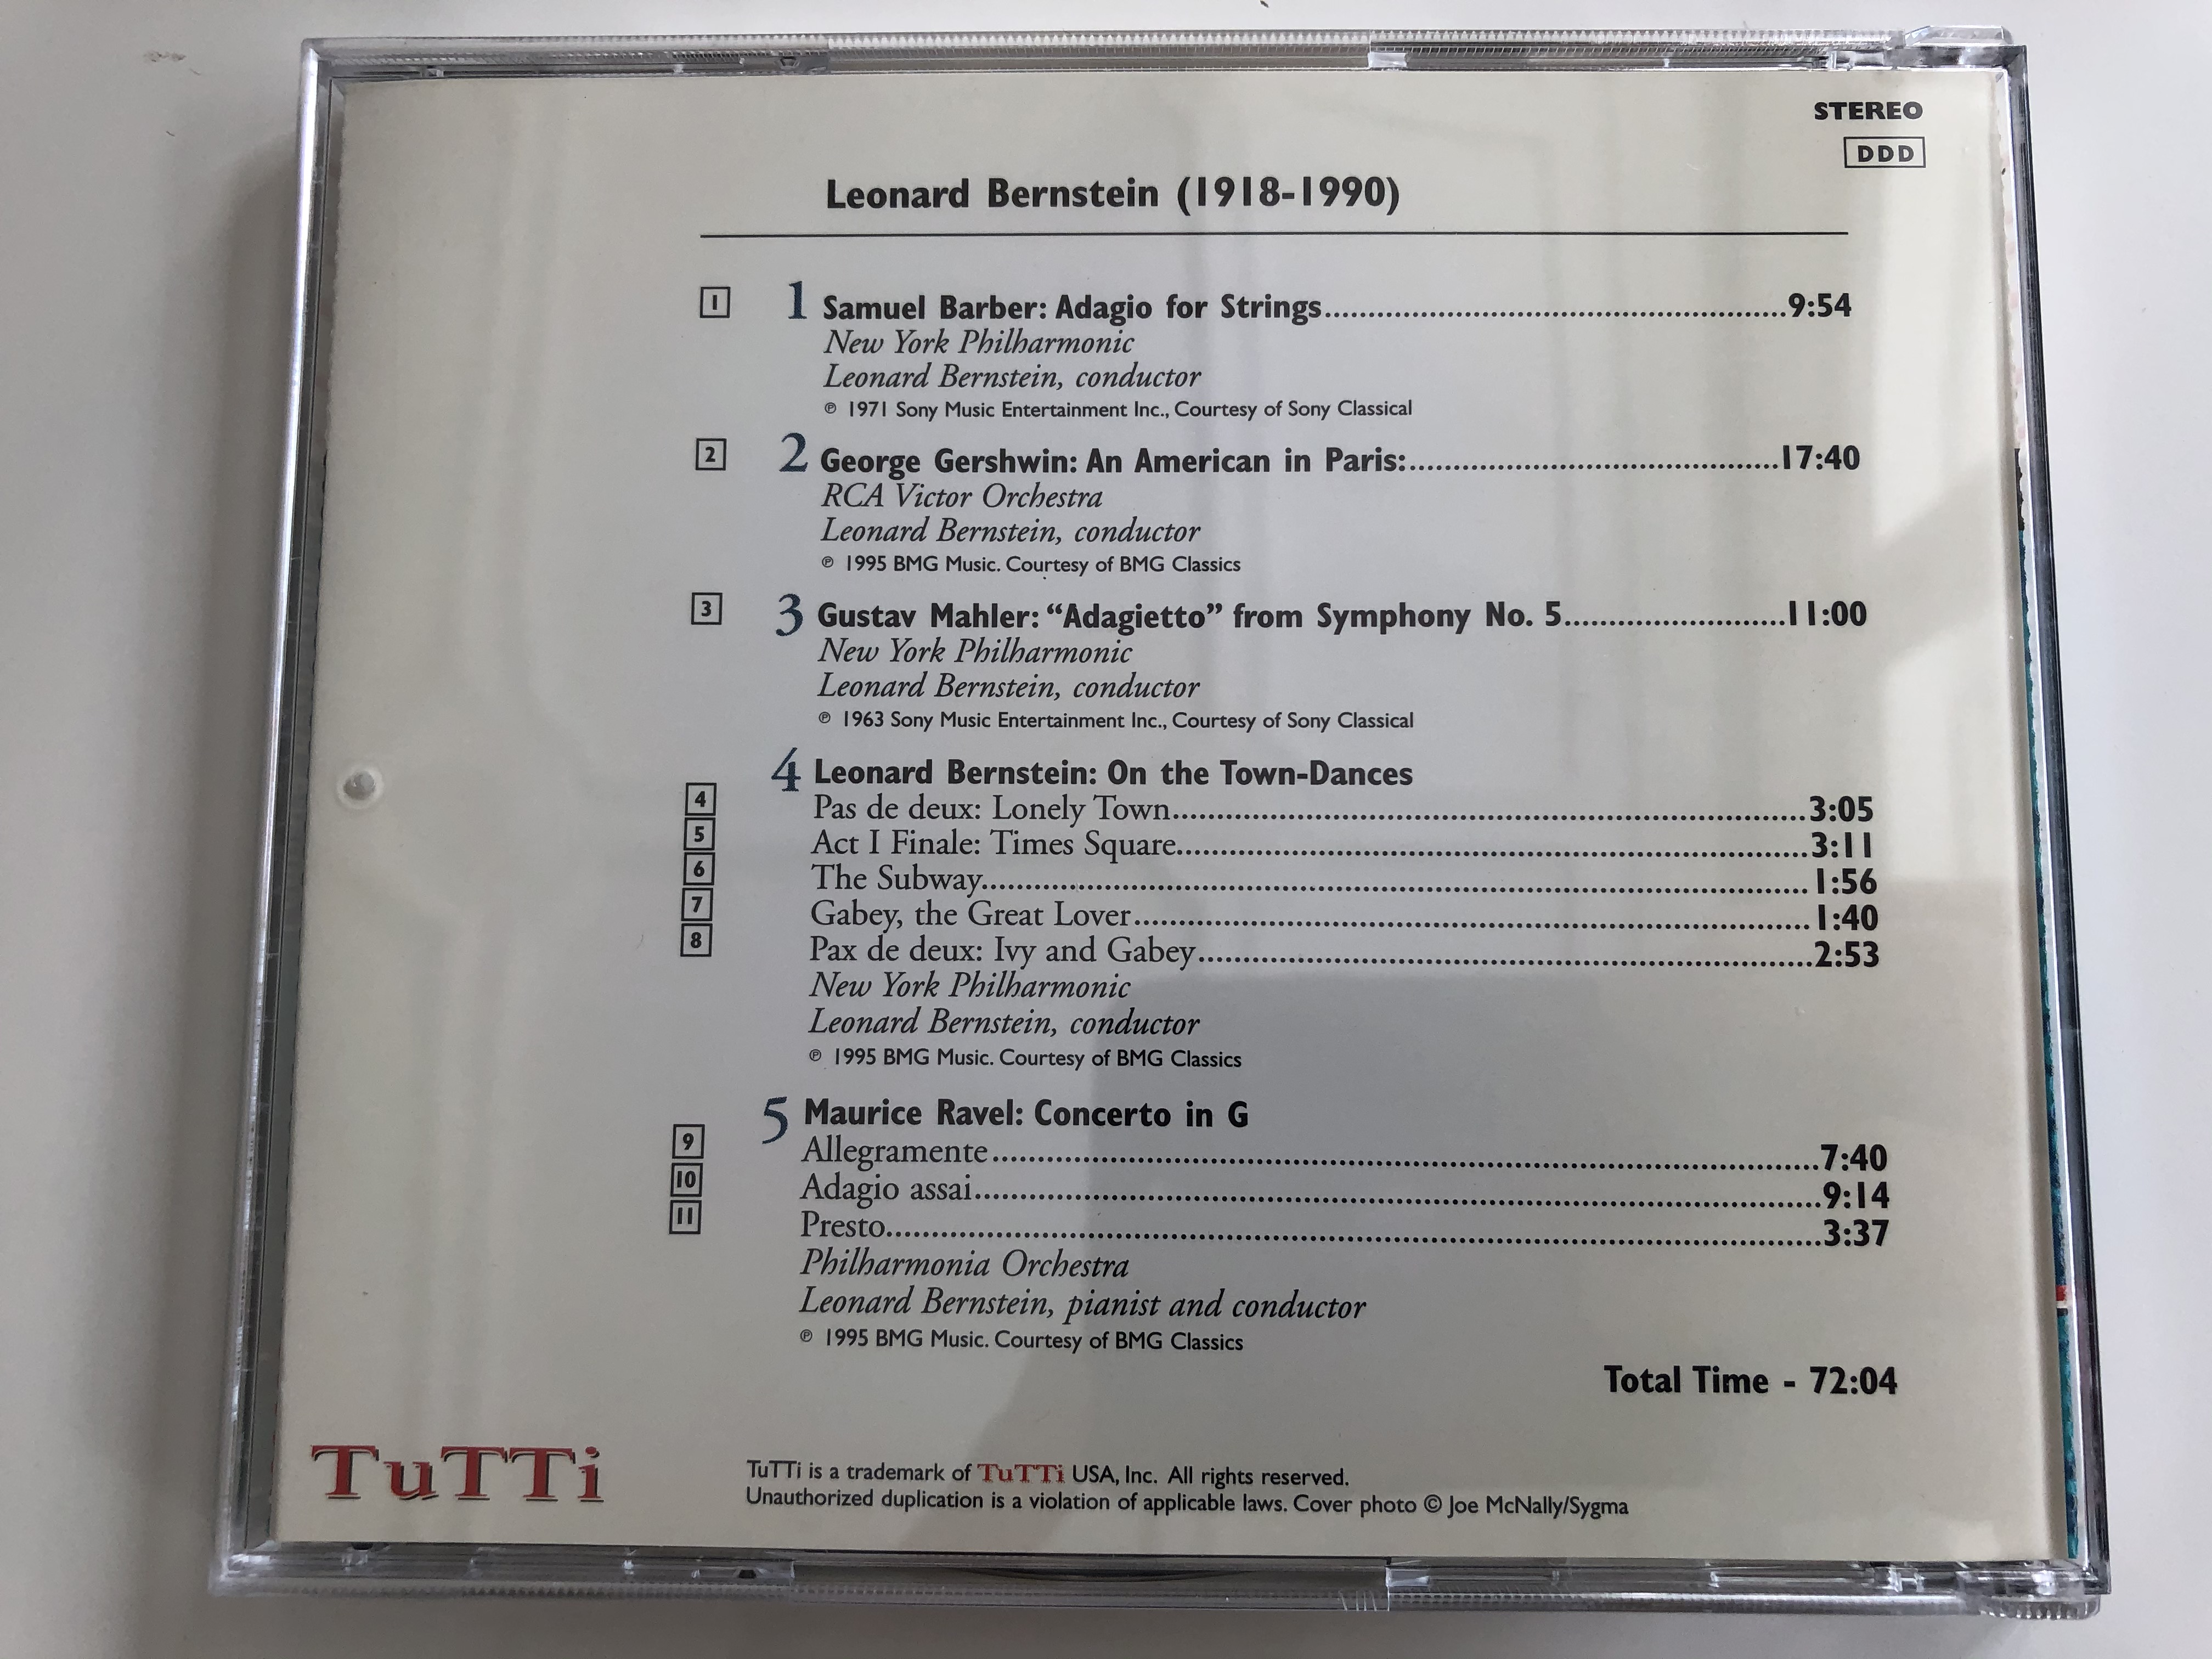 tutti-leonard-bernstein-samuel-barber-george-gershwin-gustav-mahler-leonard-bernstein-maurice-ravel-sony-classical-audio-cd-stereo-5-.jpg